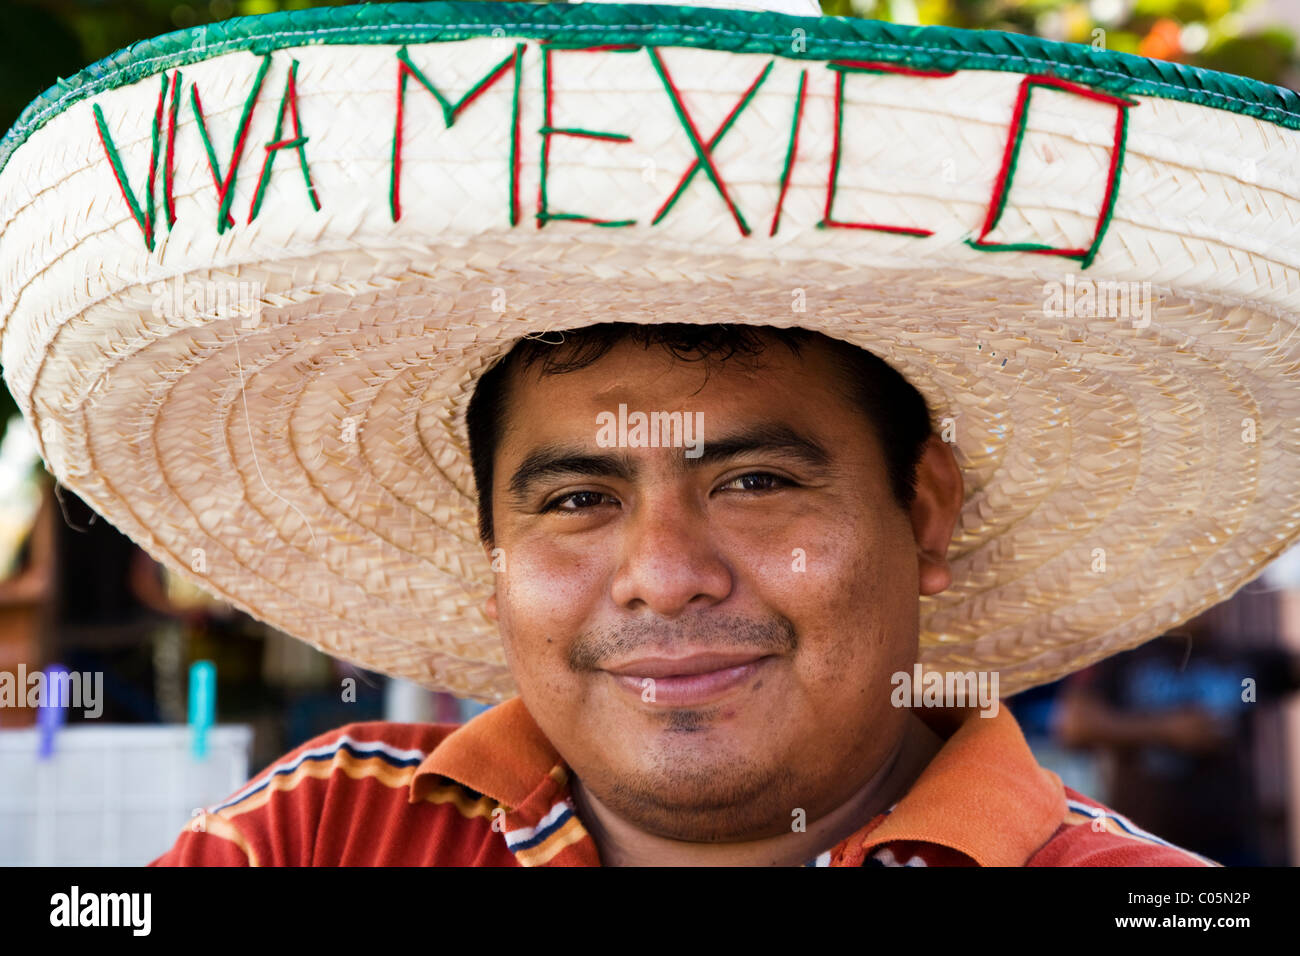 Porträt des mexikanischen Mann aus Yucatan tragen einen Sombrero mit Viva Mexico drauf, Progreso, Yucatan, Mexiko Stockfoto